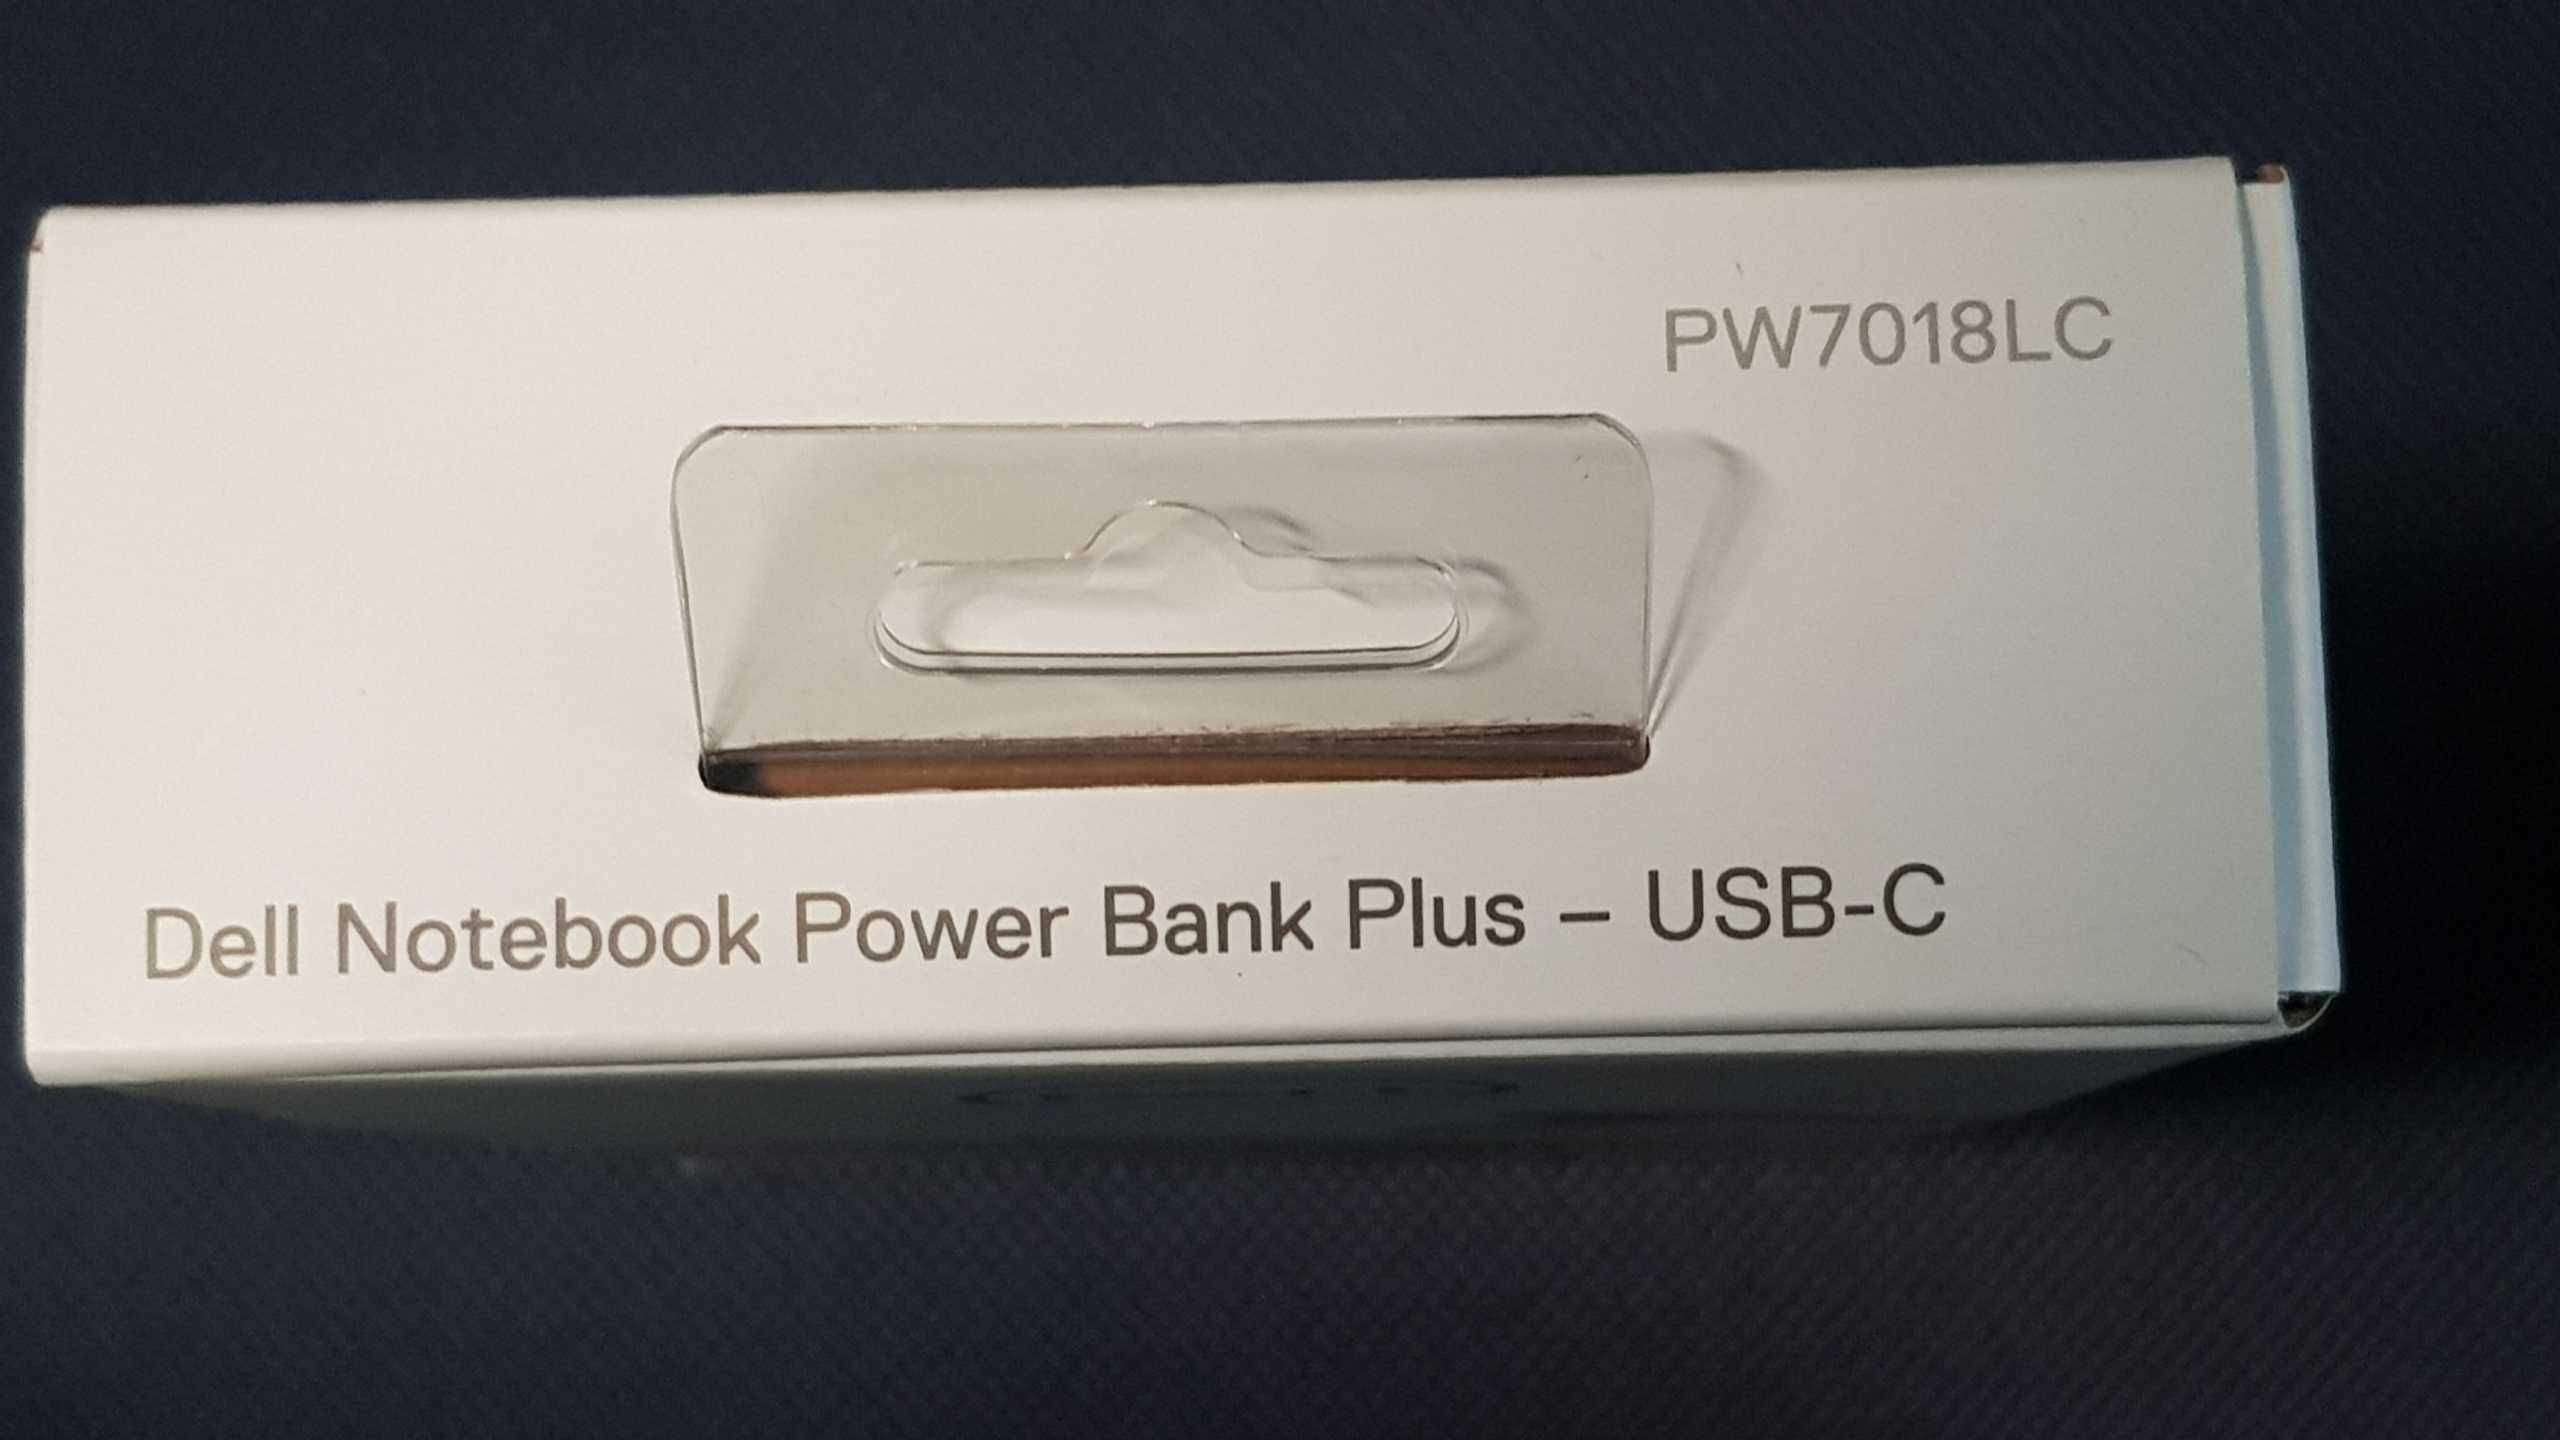 Power bank USB-C Dell PW7018LC (NOVO)